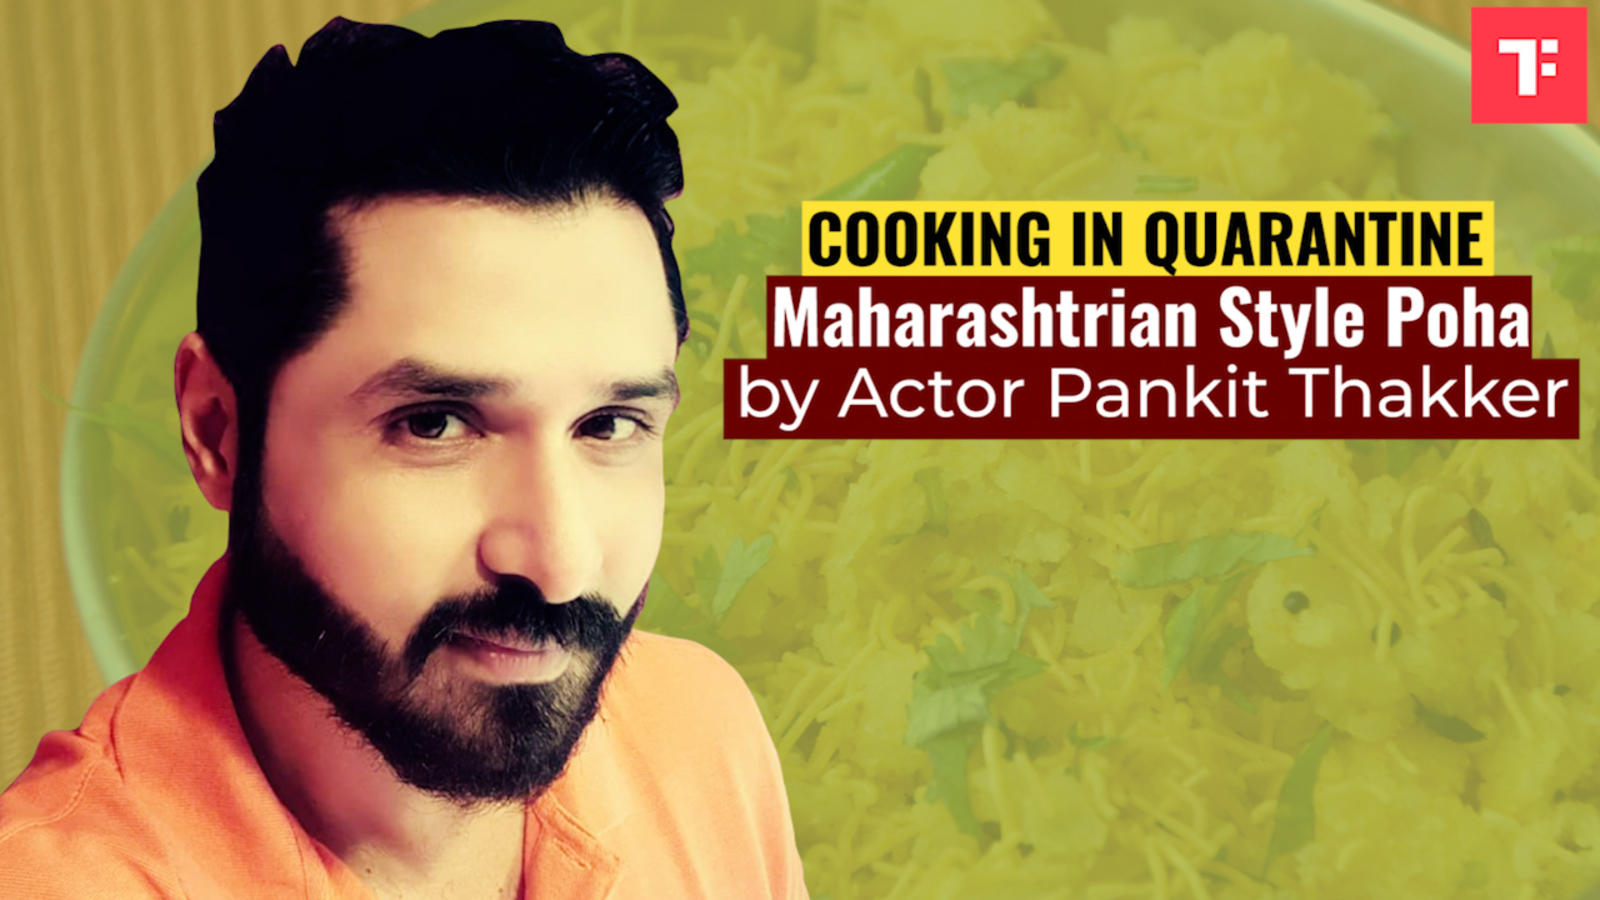 Watch: Maharashtrian Style Poha by actor Pankit Thakker - Times Food